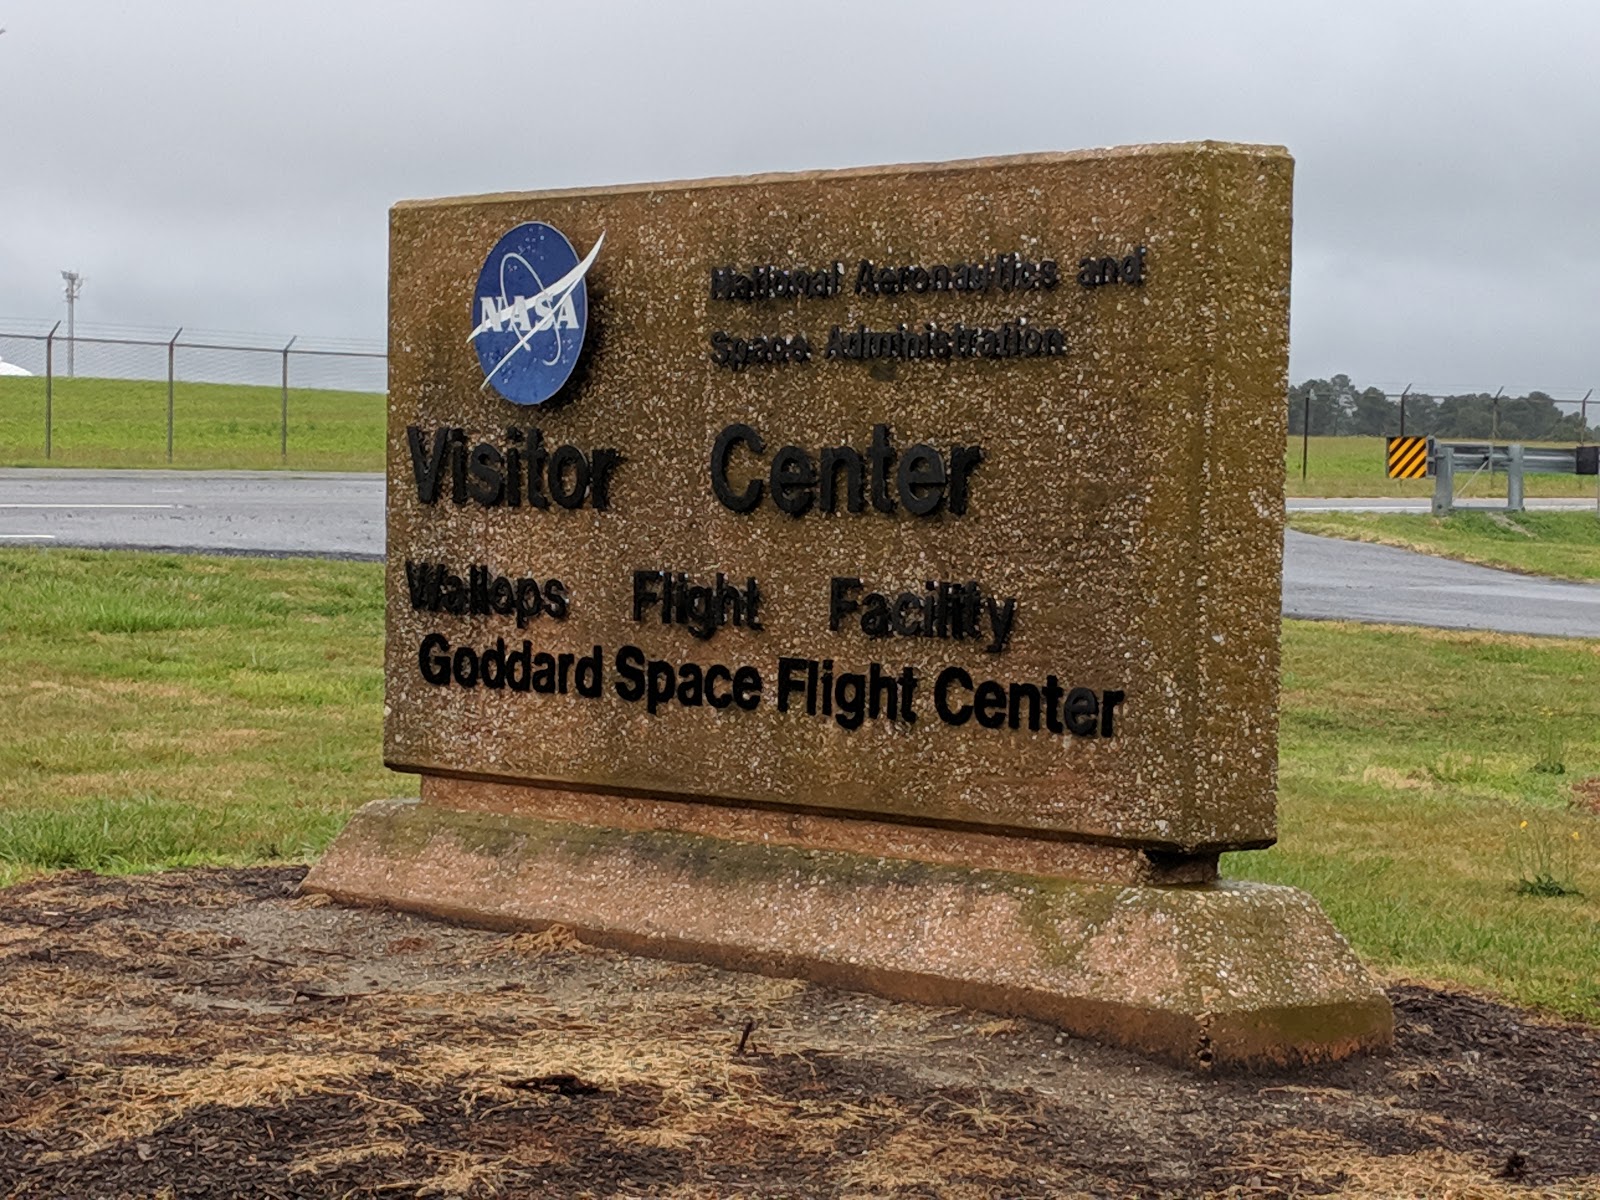 Nasa Wallops Flight Facility Visitor Center Onsite